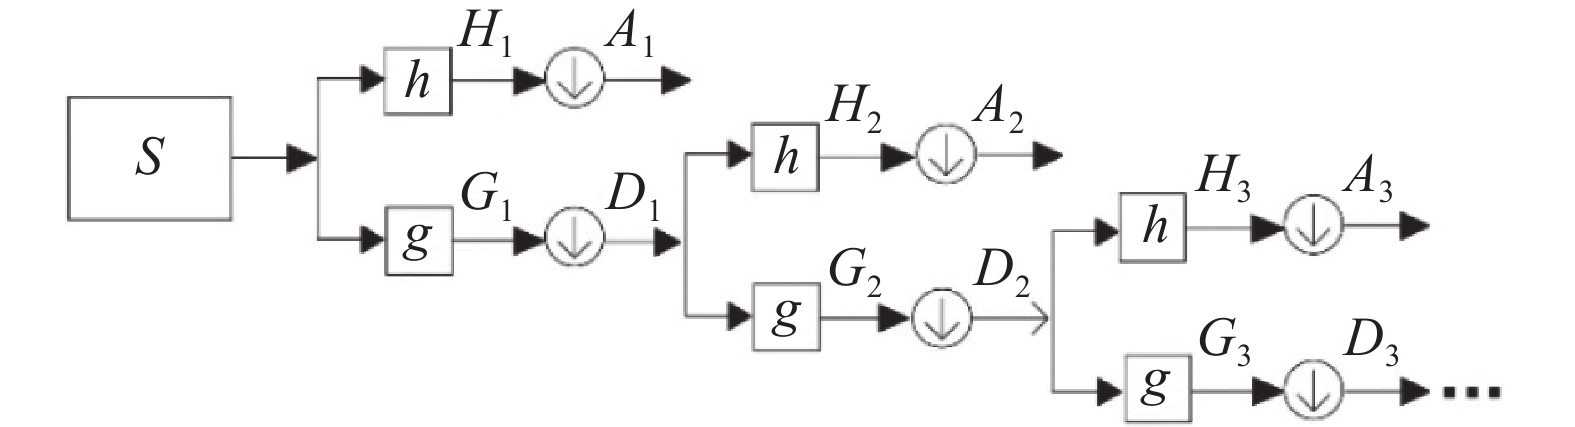 Schematic diagram of wavelet transform